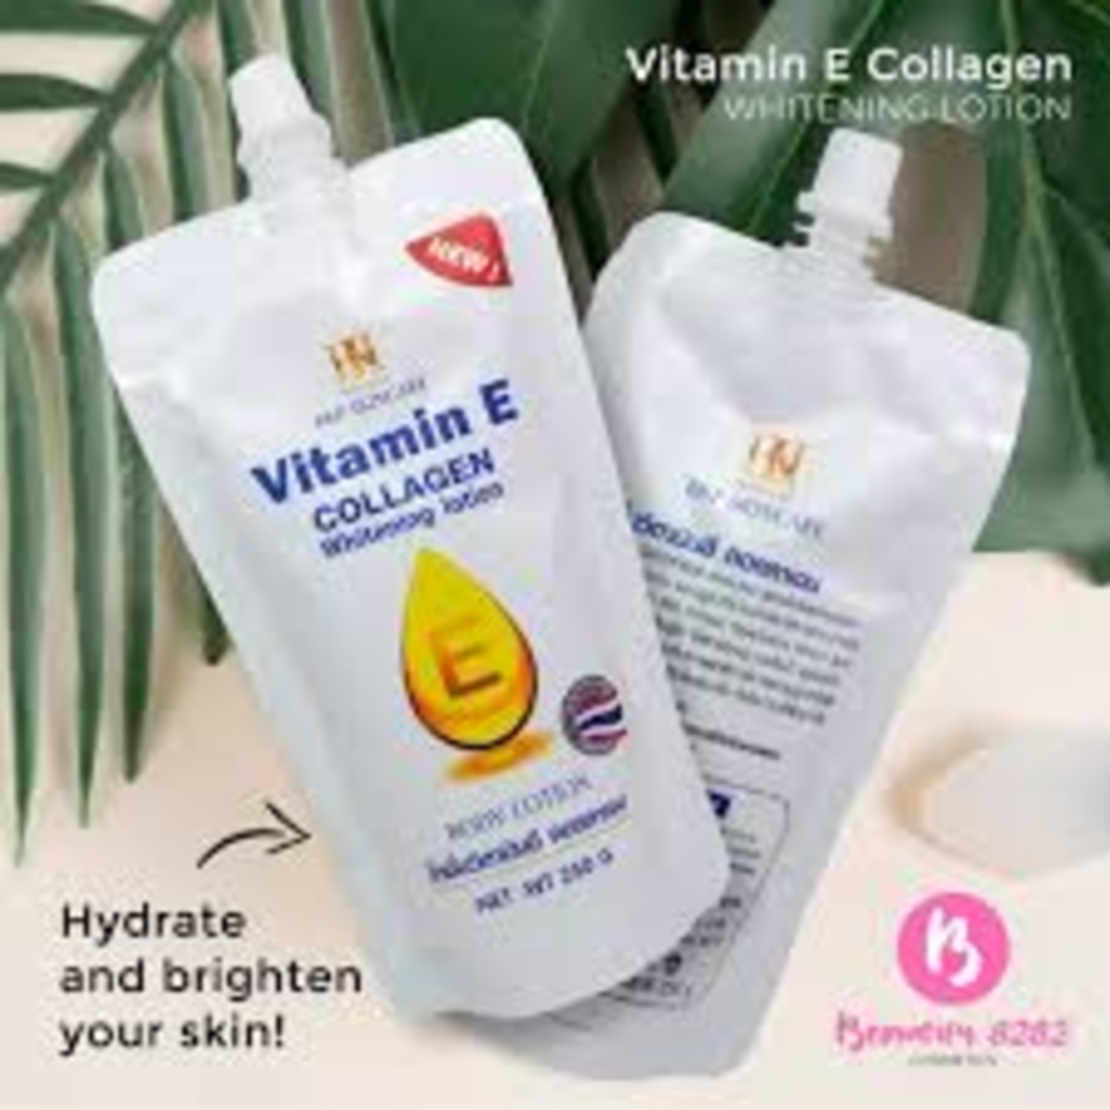 Vitamin E - Collagen Whitening Lotion Body Lotion 250g